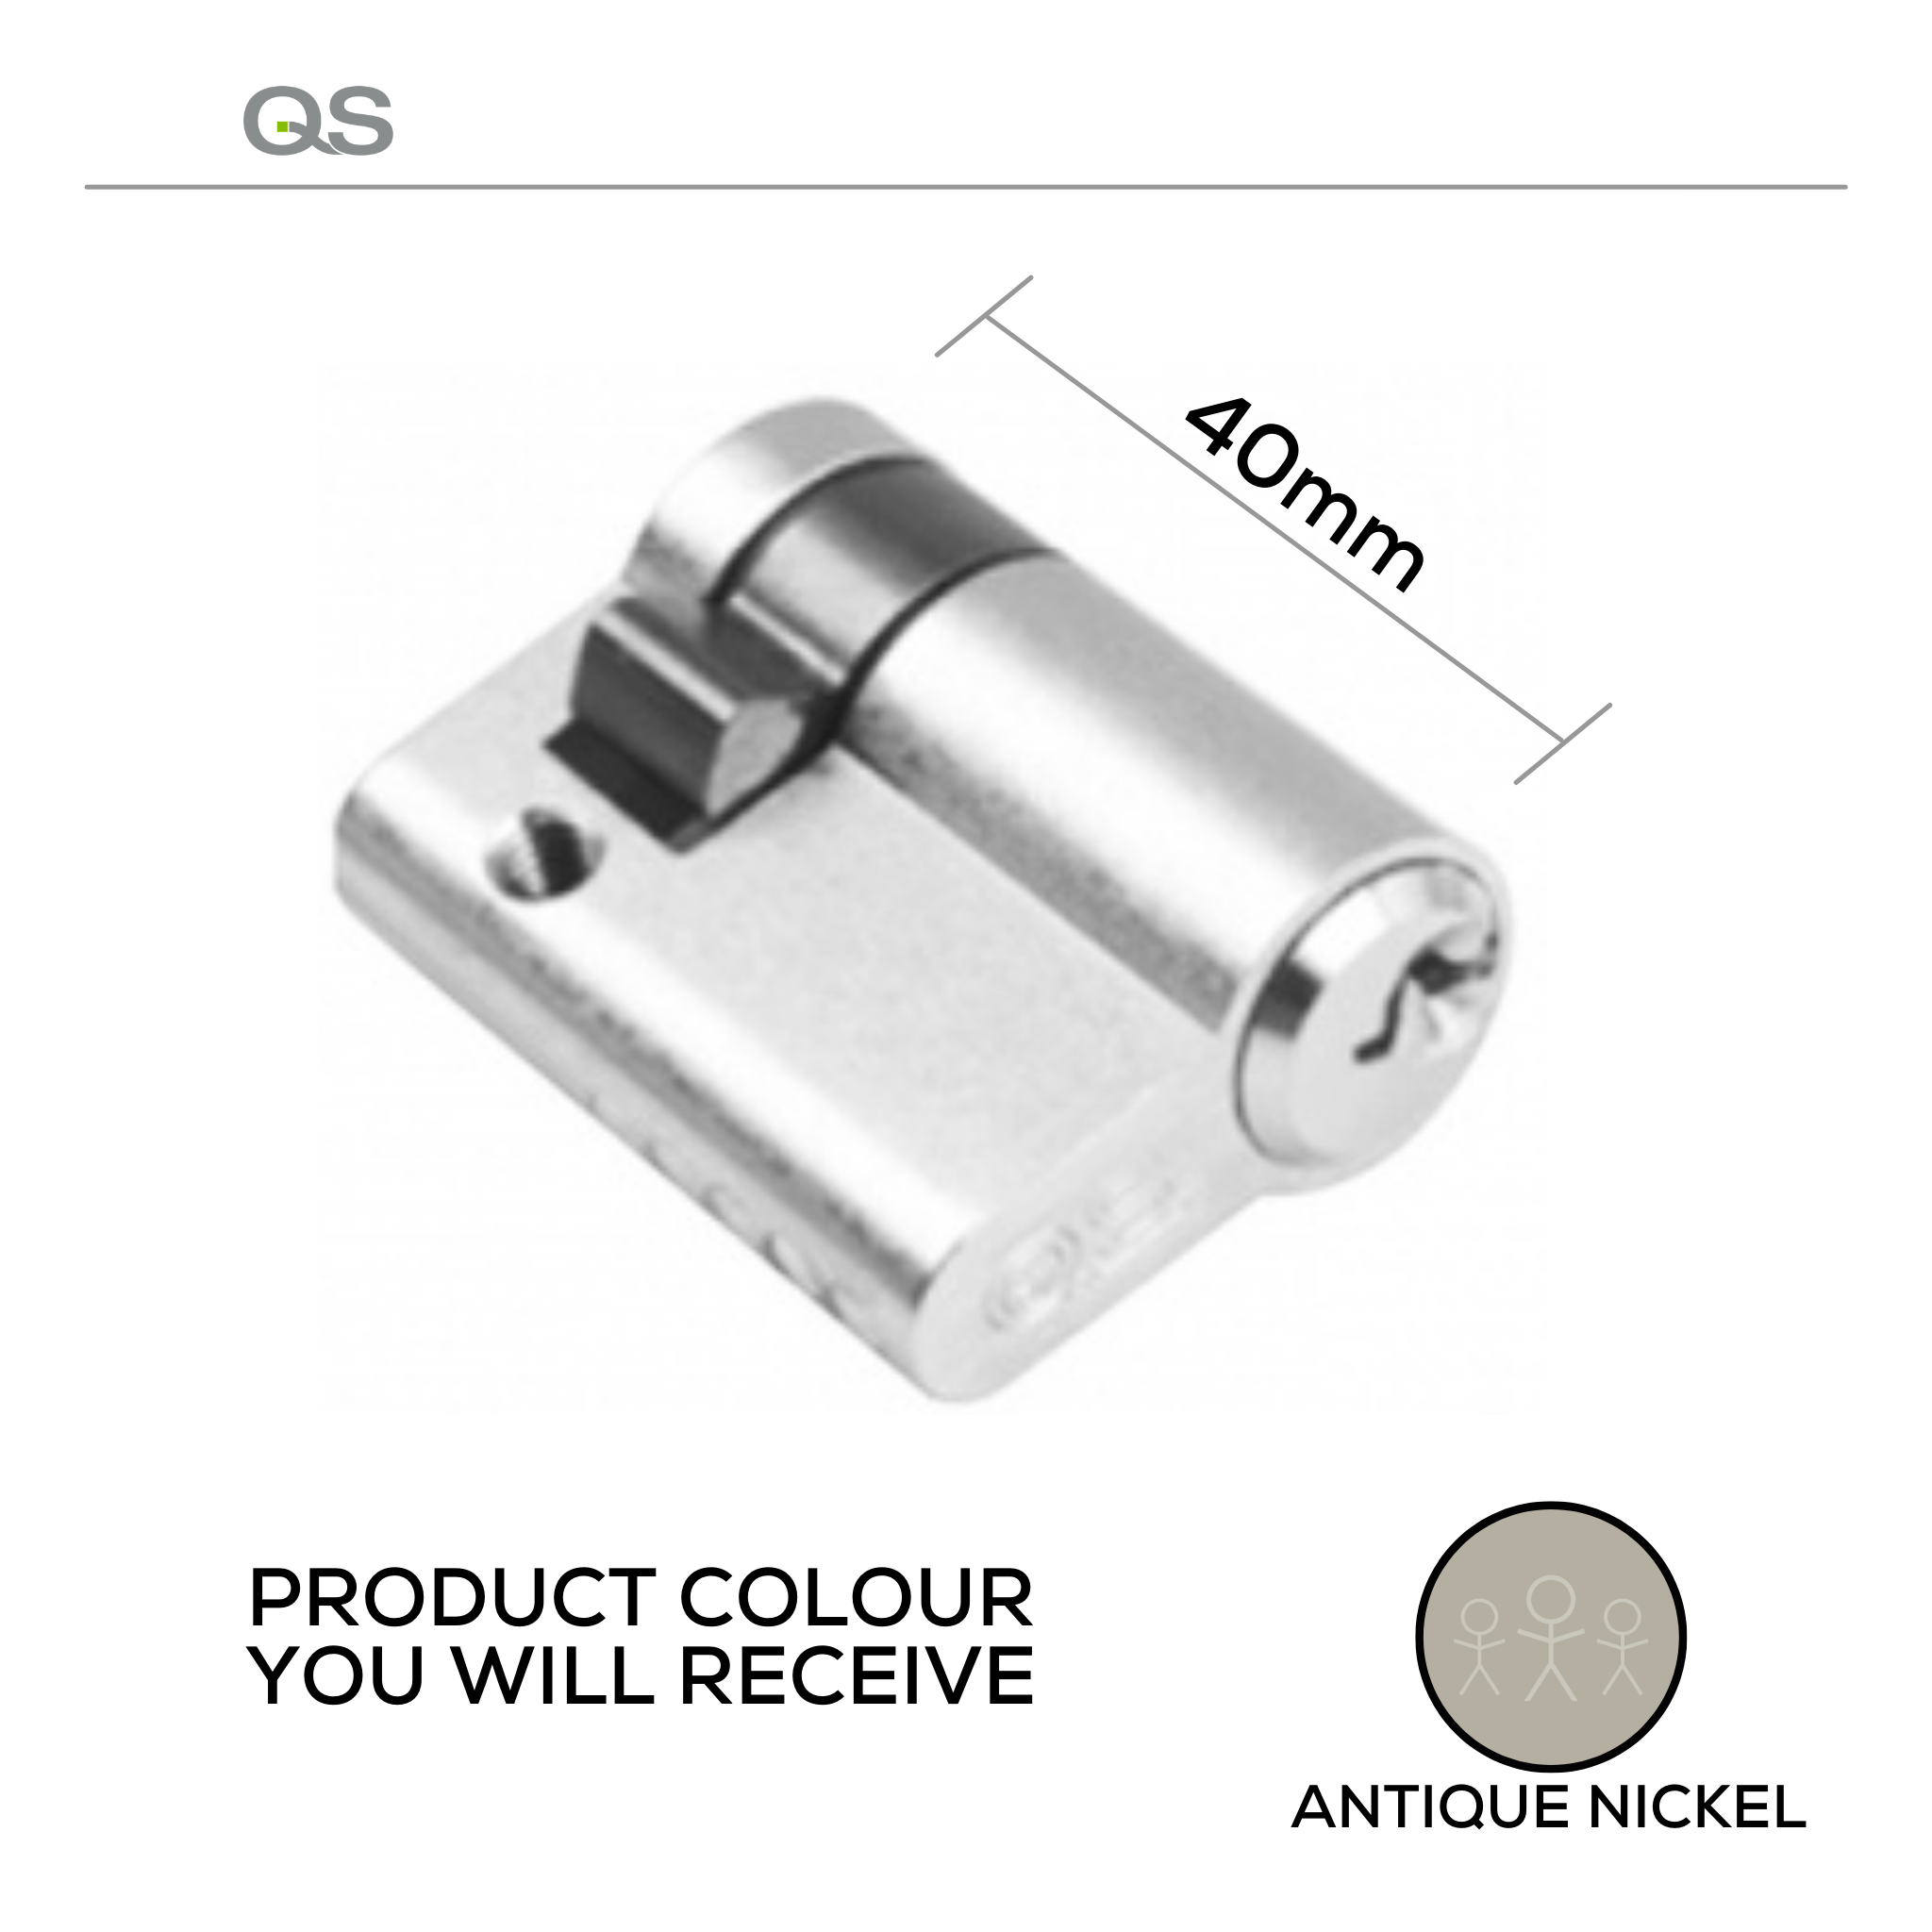 QS1102/AN, 40mm - 30/10, Half (Single Cylinder), Key, Keyed to Differ (Standard), 3 Keys, 5 Pin, Antique Nickel, QS